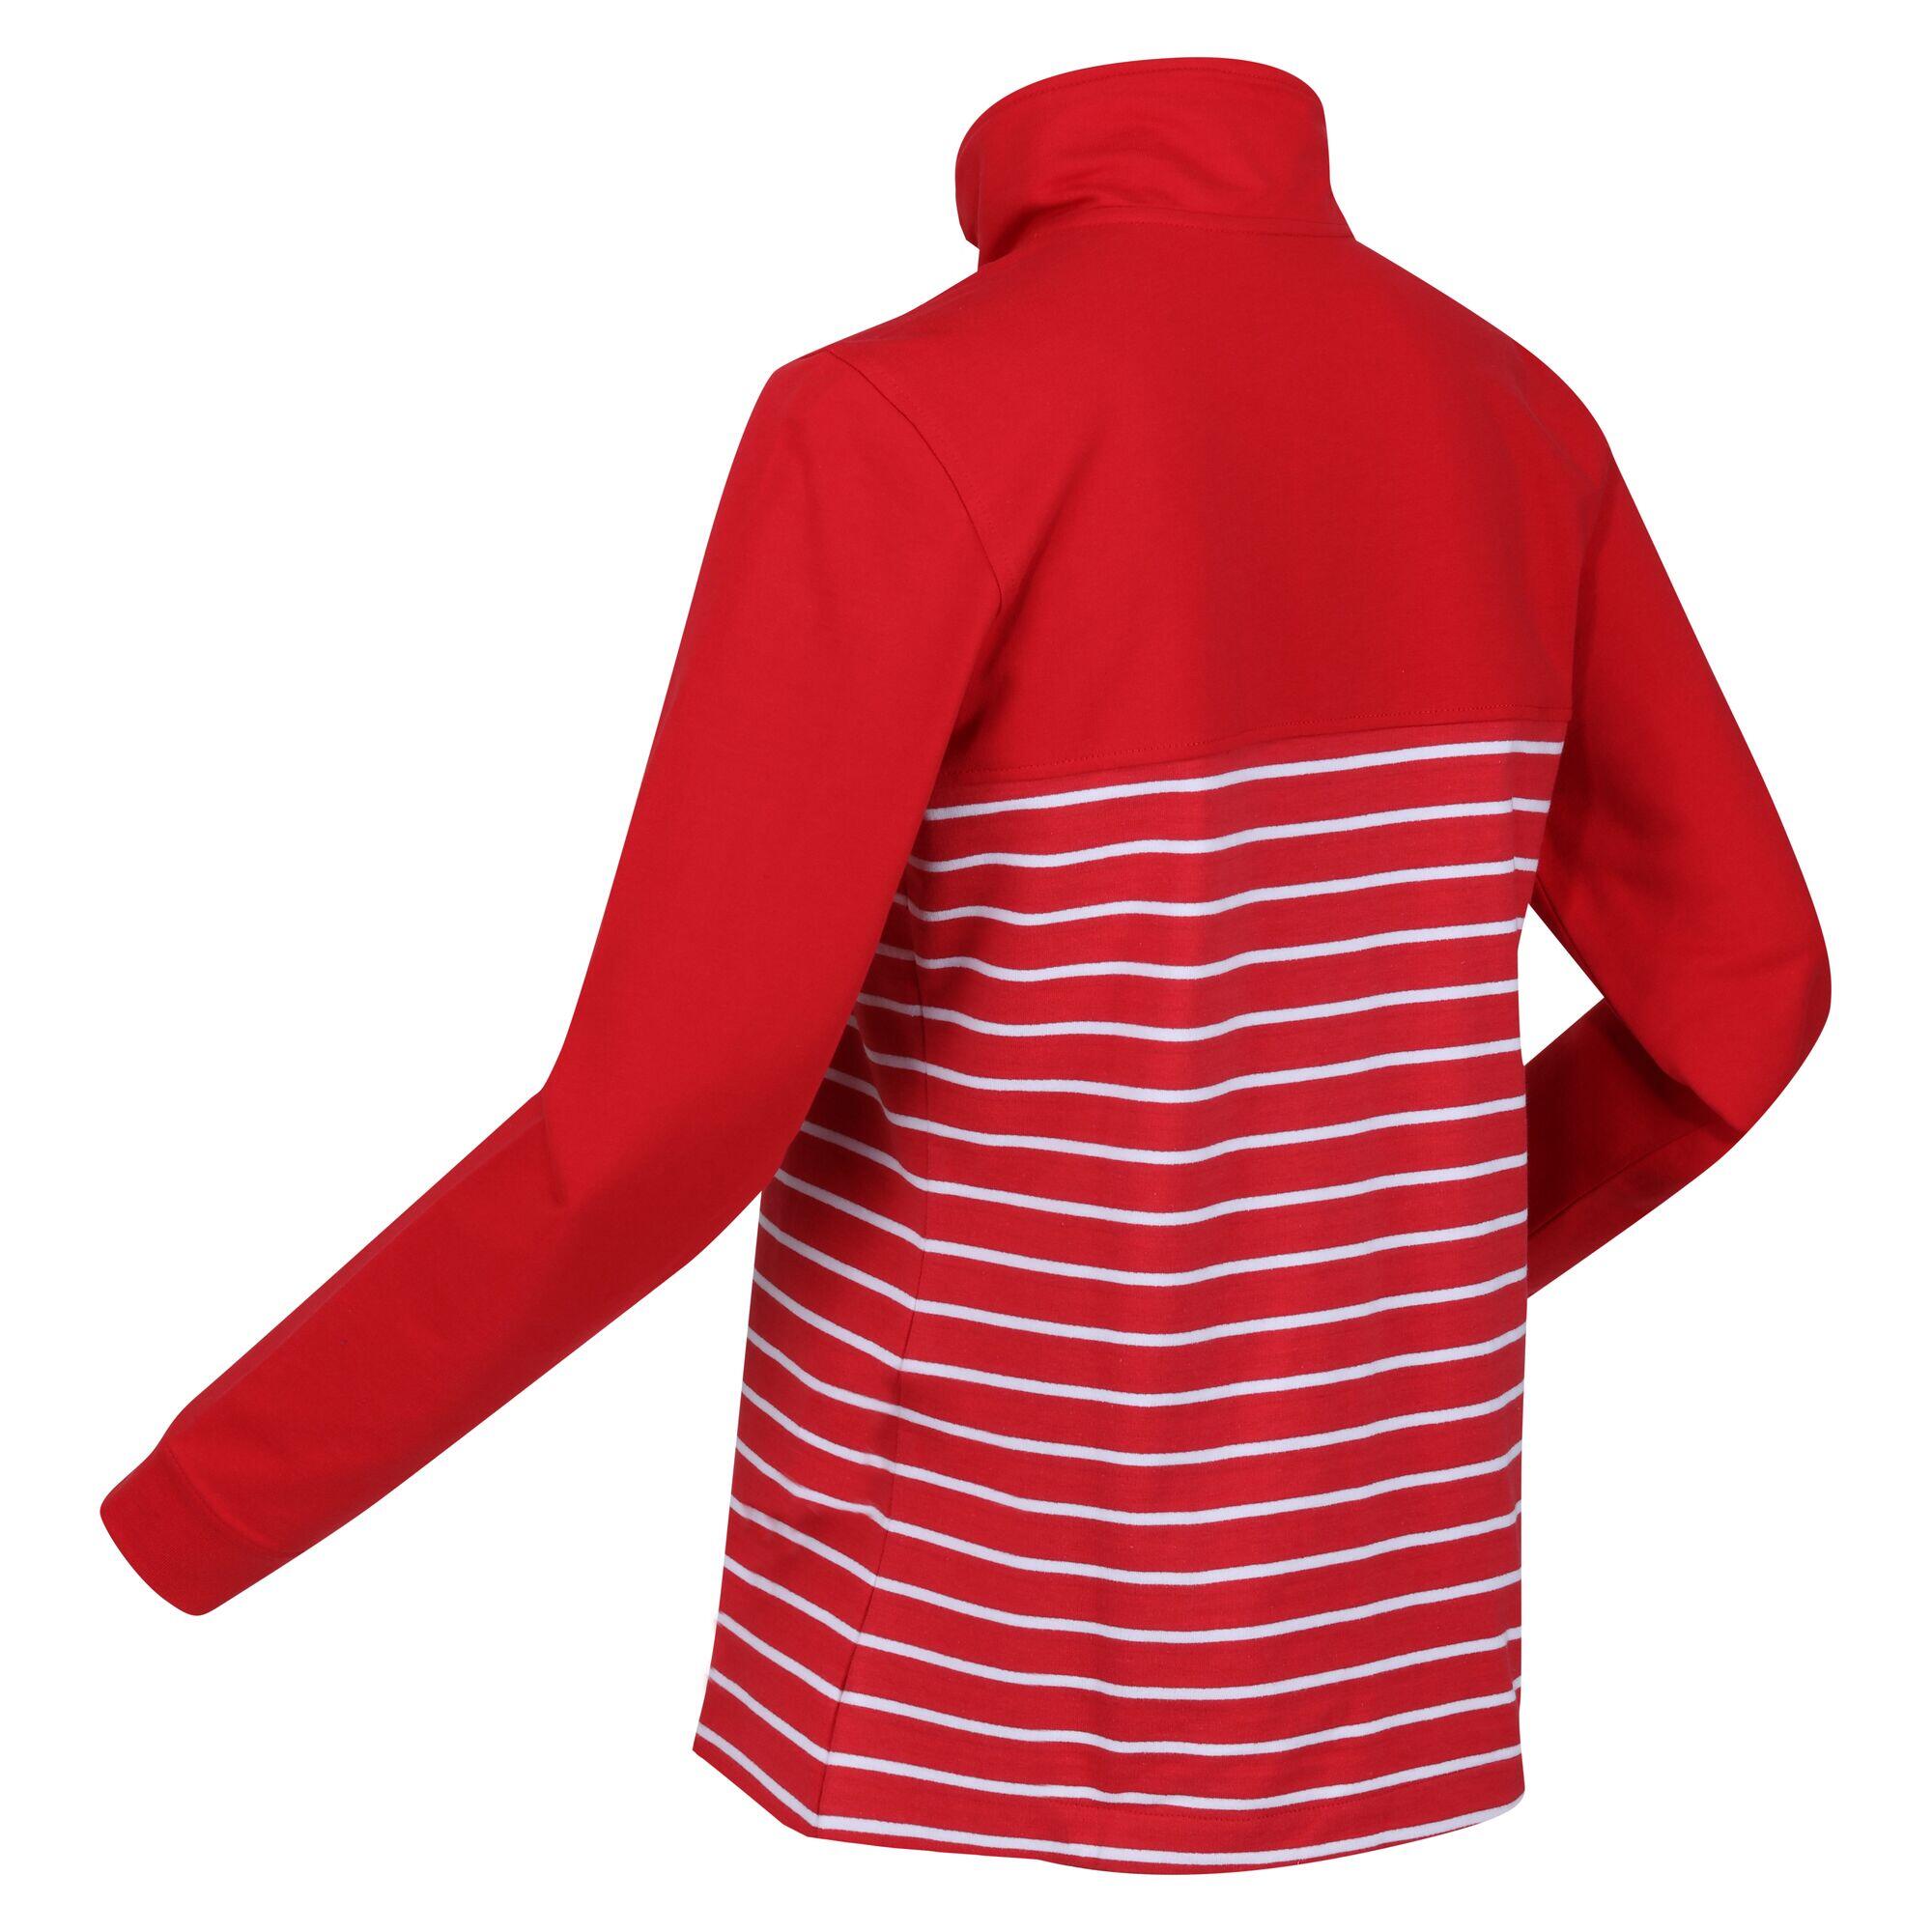 Womens/Ladies Bayla Striped Button Neck Sweatshirt (Miami Red/White) 4/5